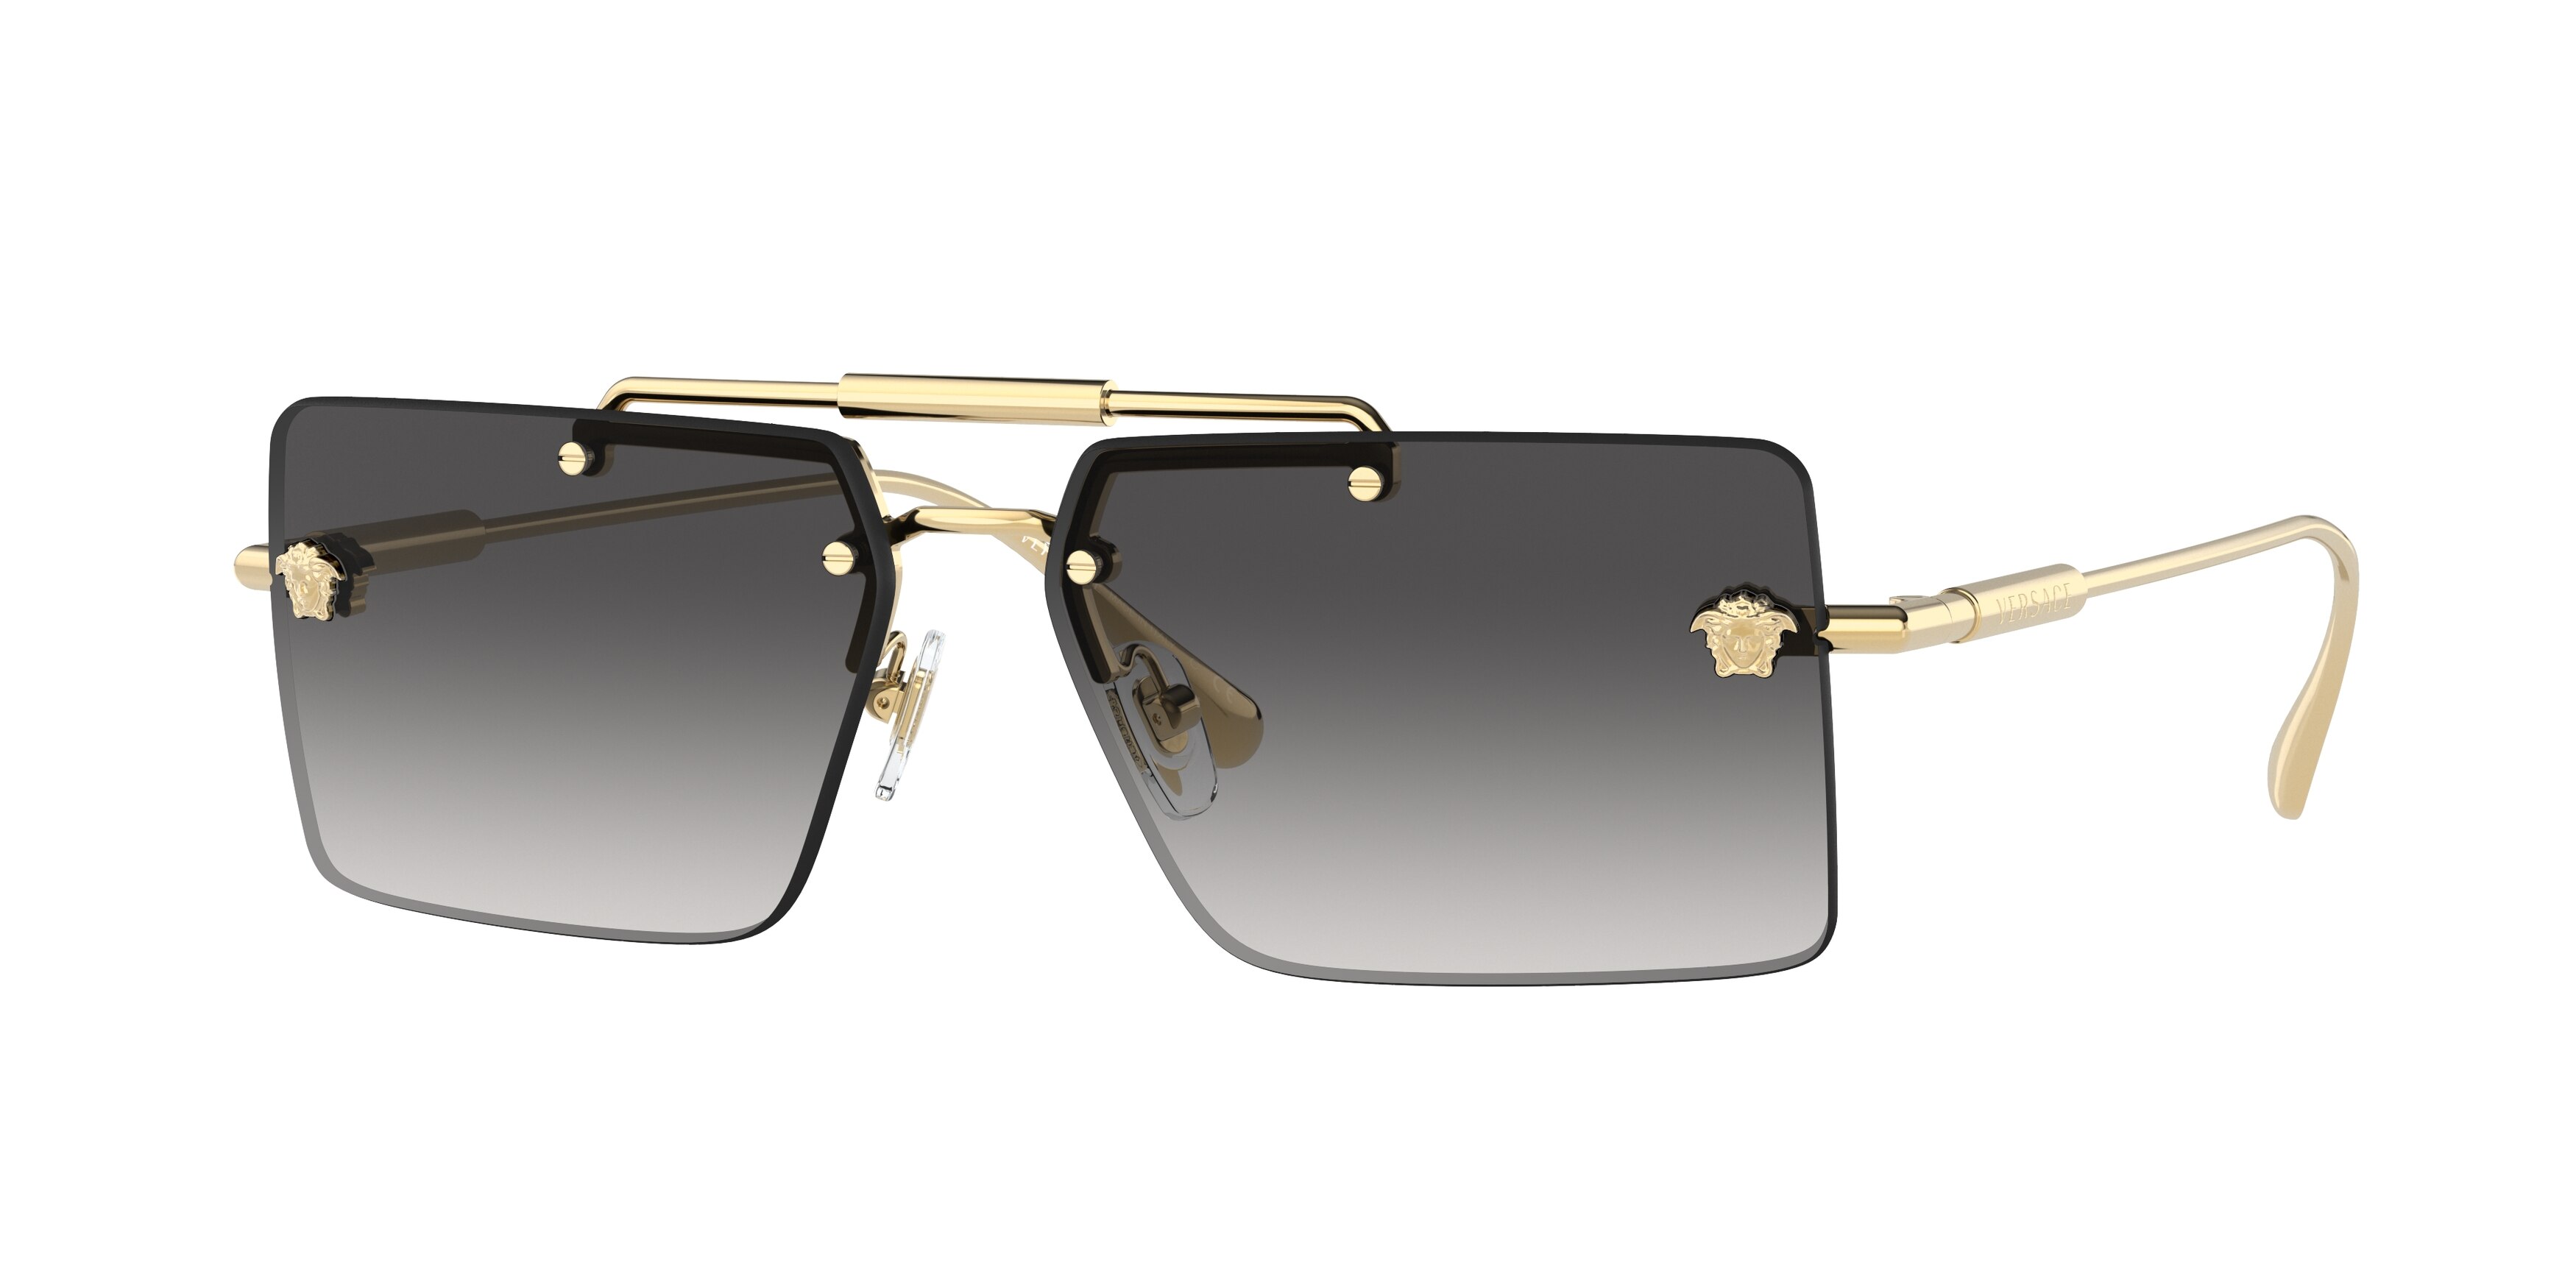 Sunglasses Online Versace - Amevista - 11